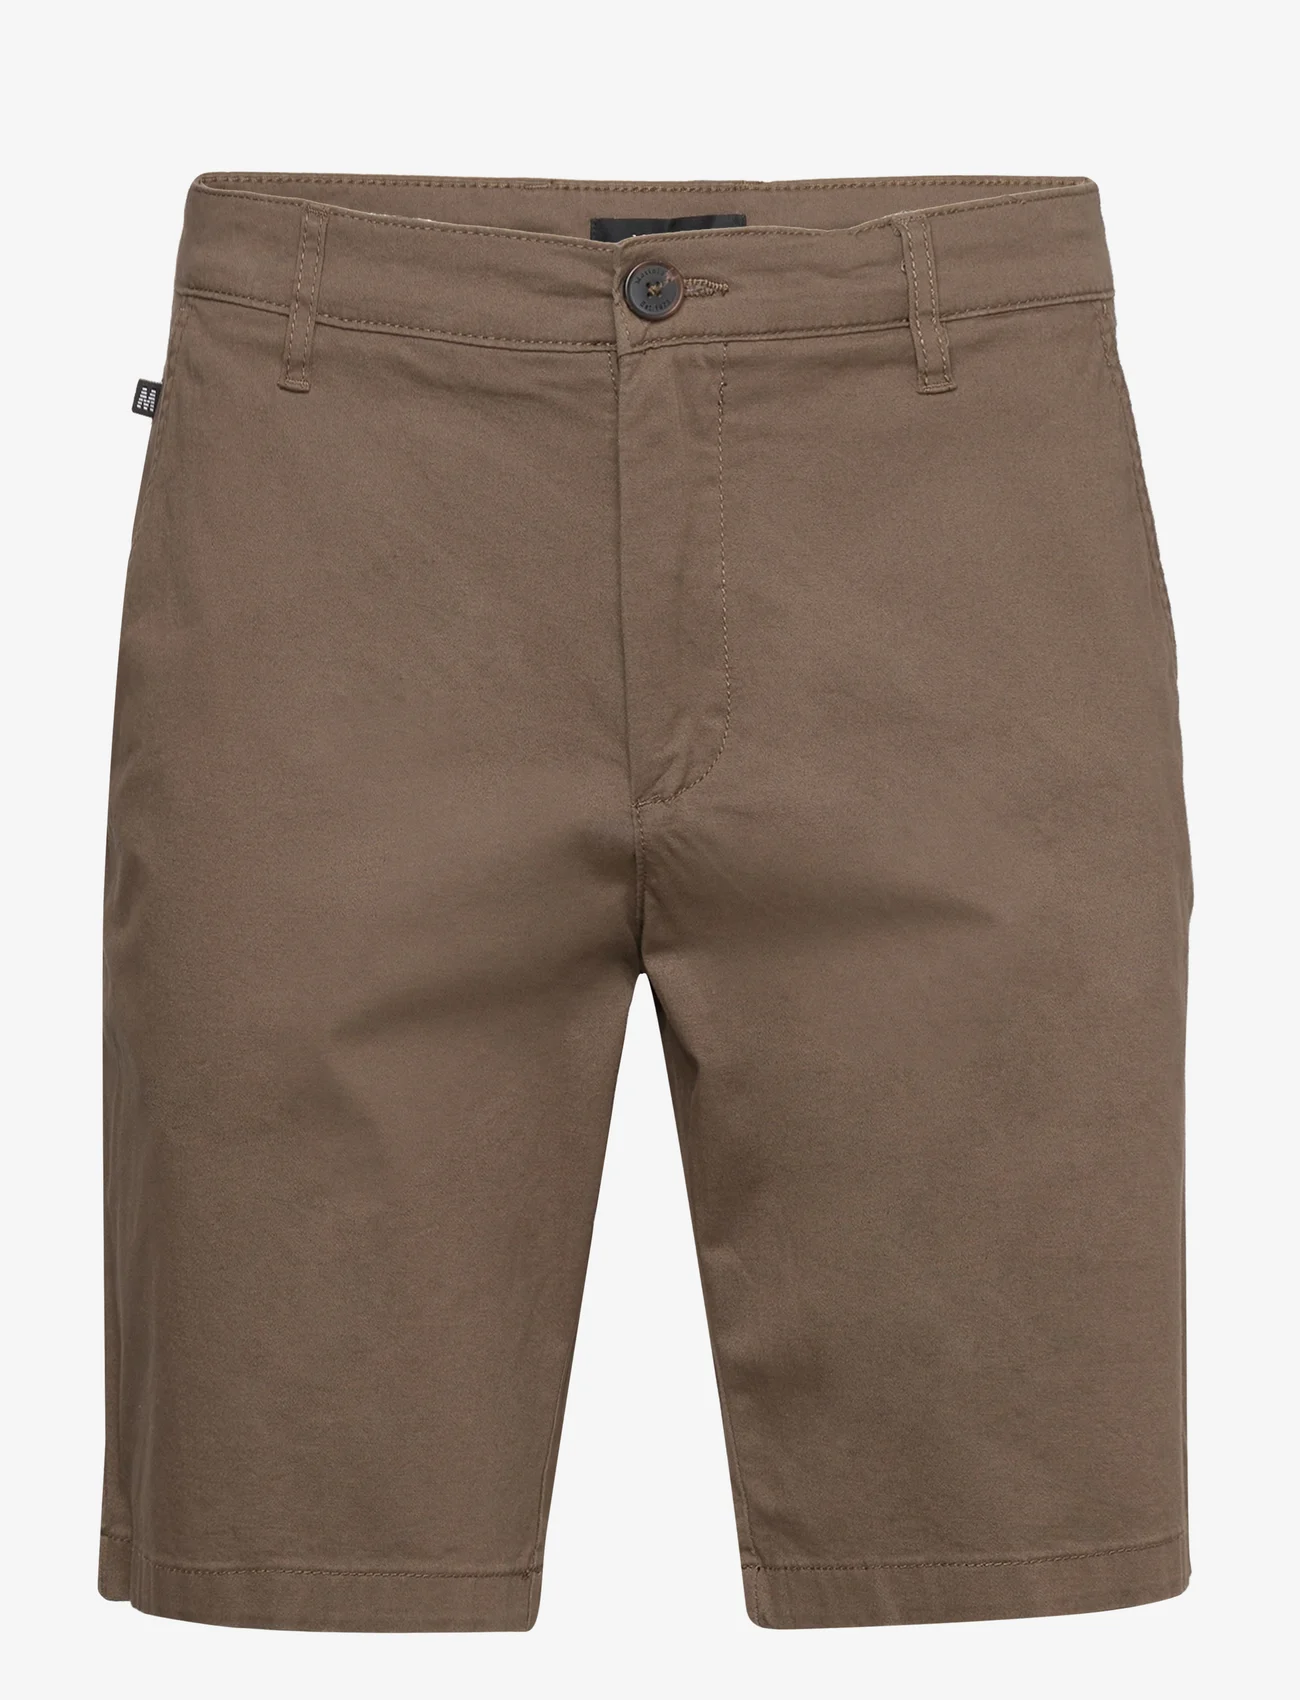 Matinique - MAthomas Short - chinos shorts - brown soil - 0